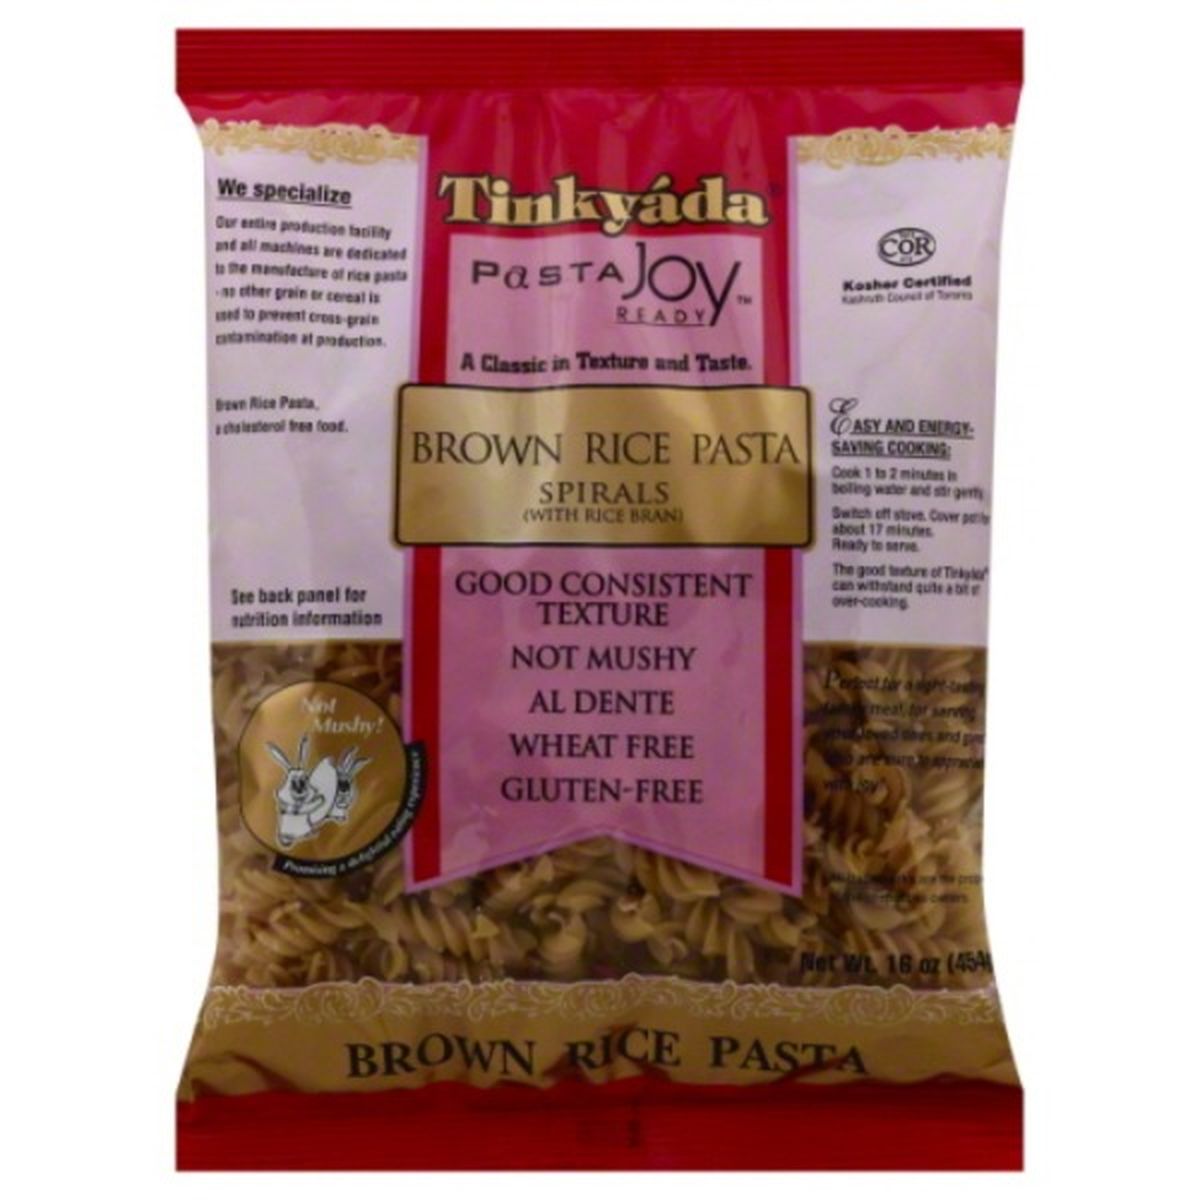 Calories in Tinkyada Pasta Joy Ready Brown Rice Pasta, Spirals